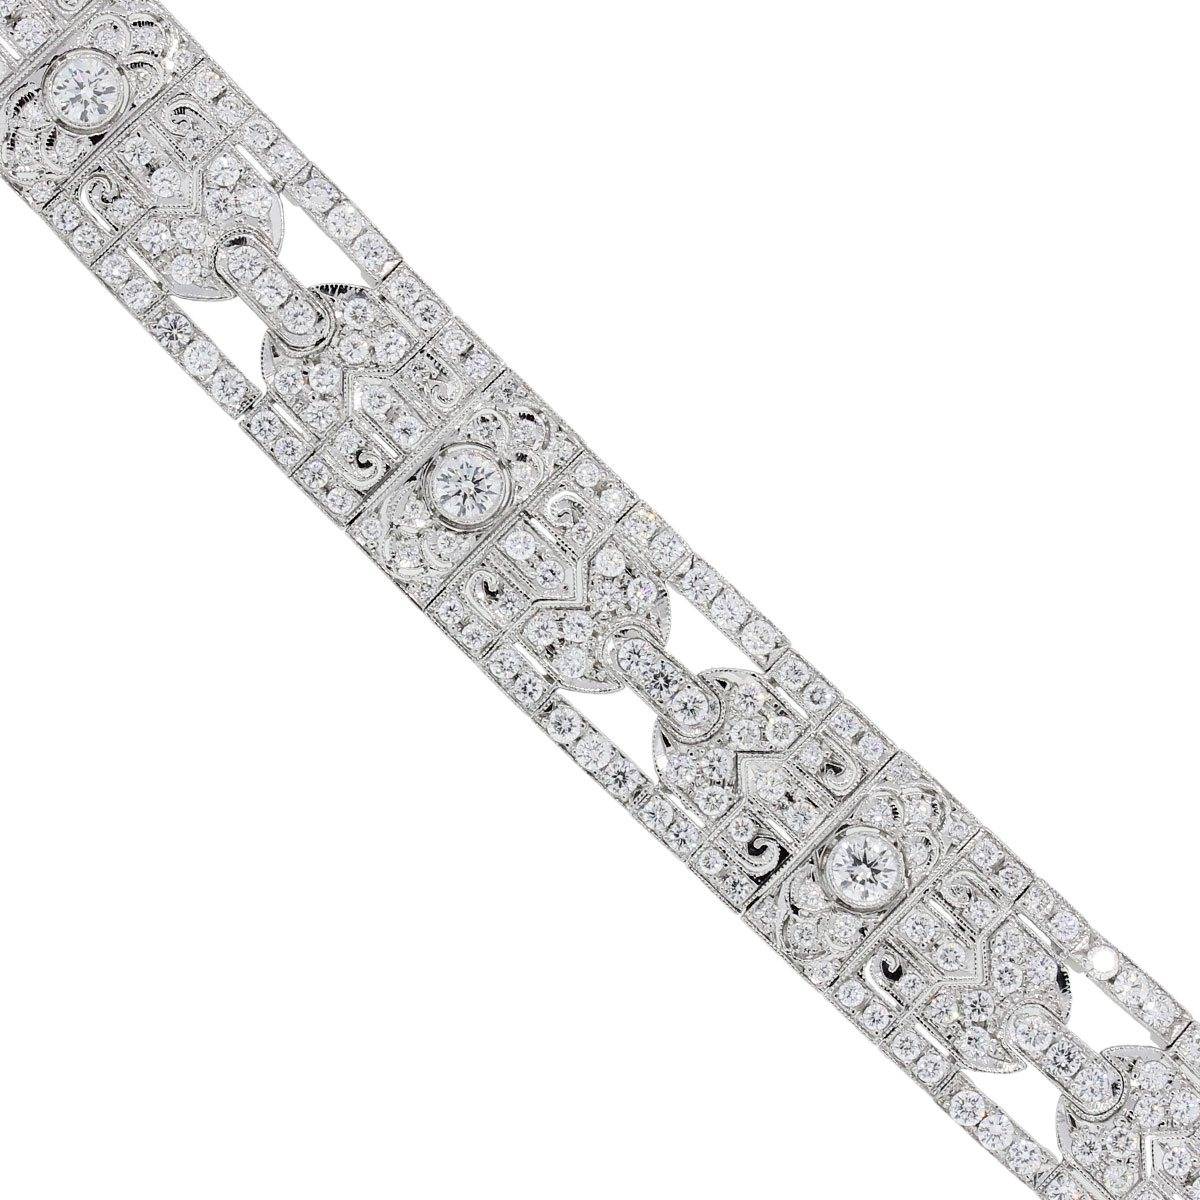 Platinum Art Deco style diamond bracelet